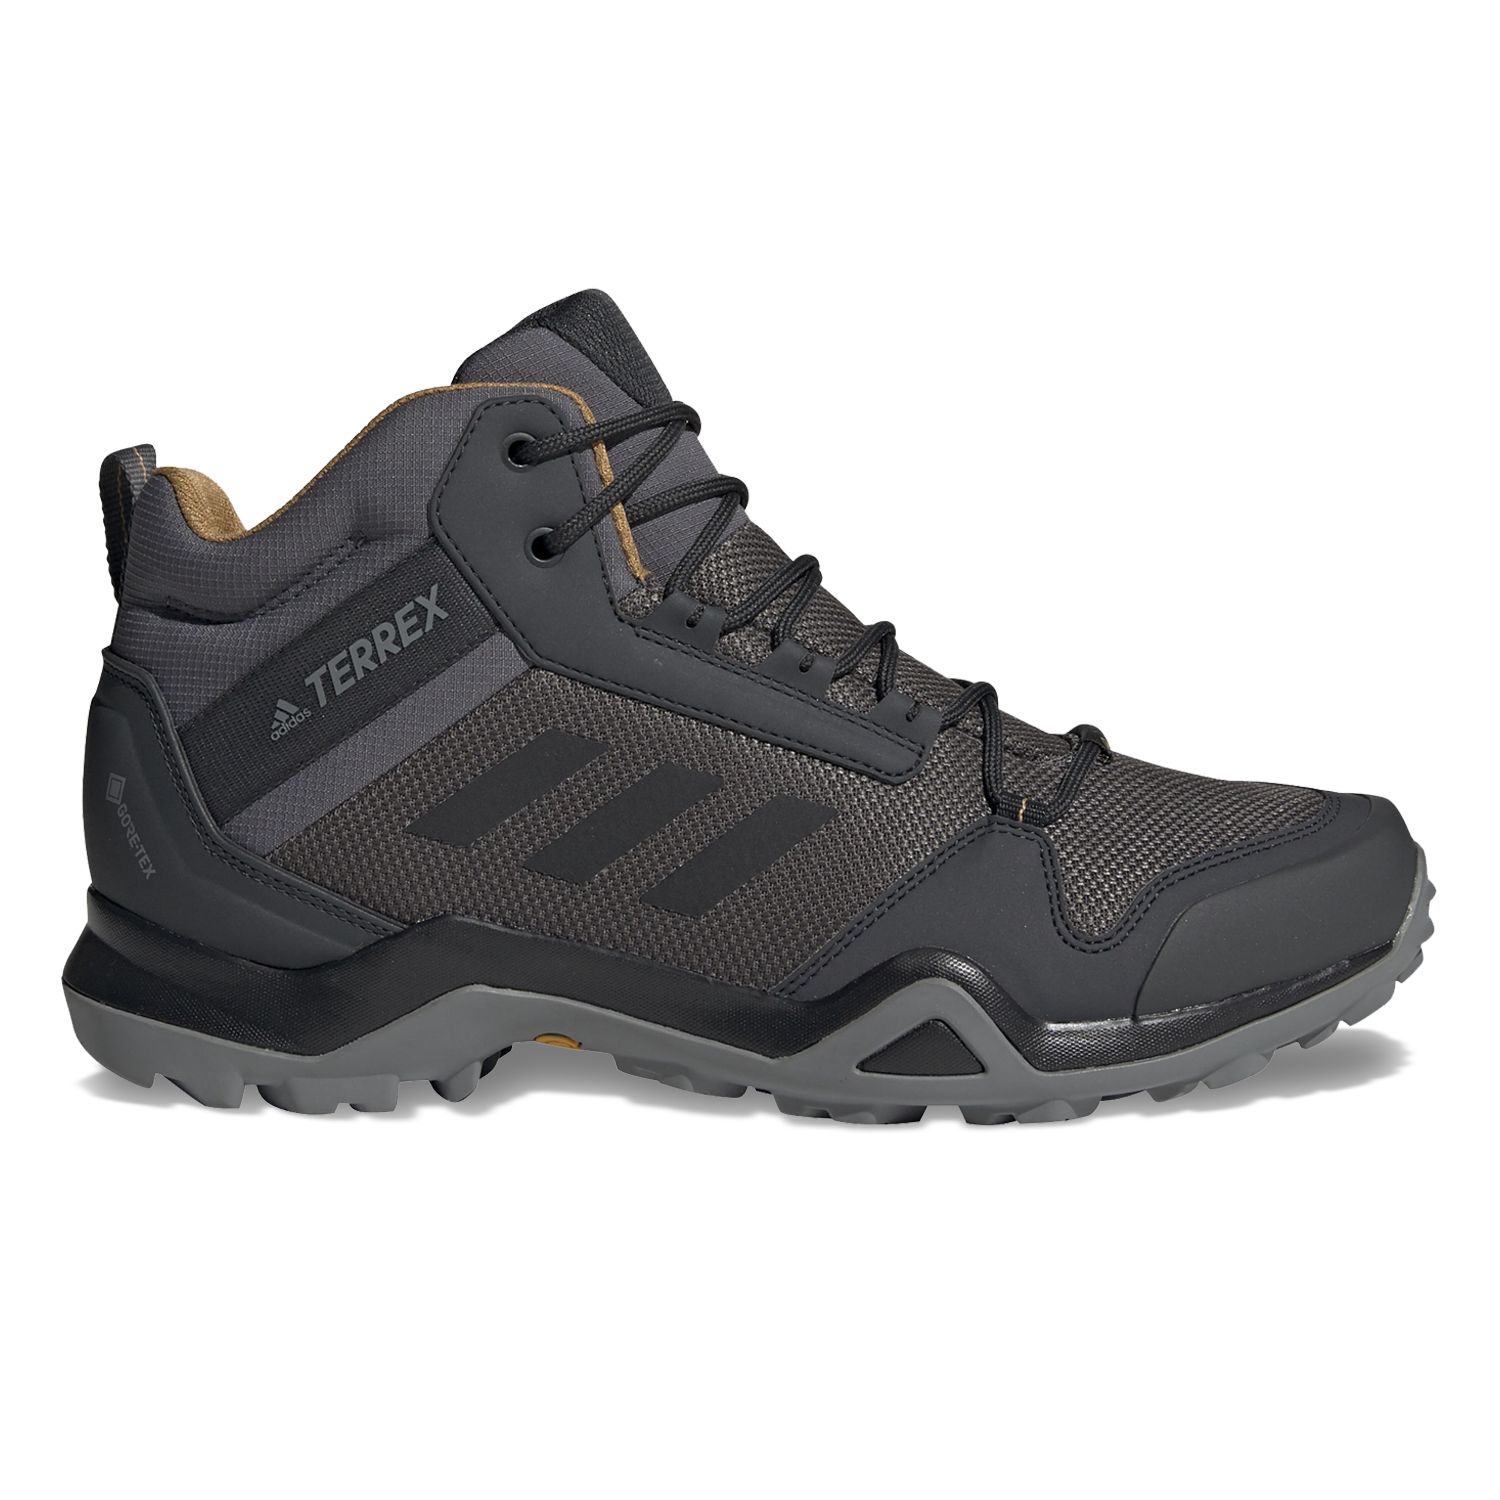 adidas outdoor men's terrex ax3 mid gtx hiking boot